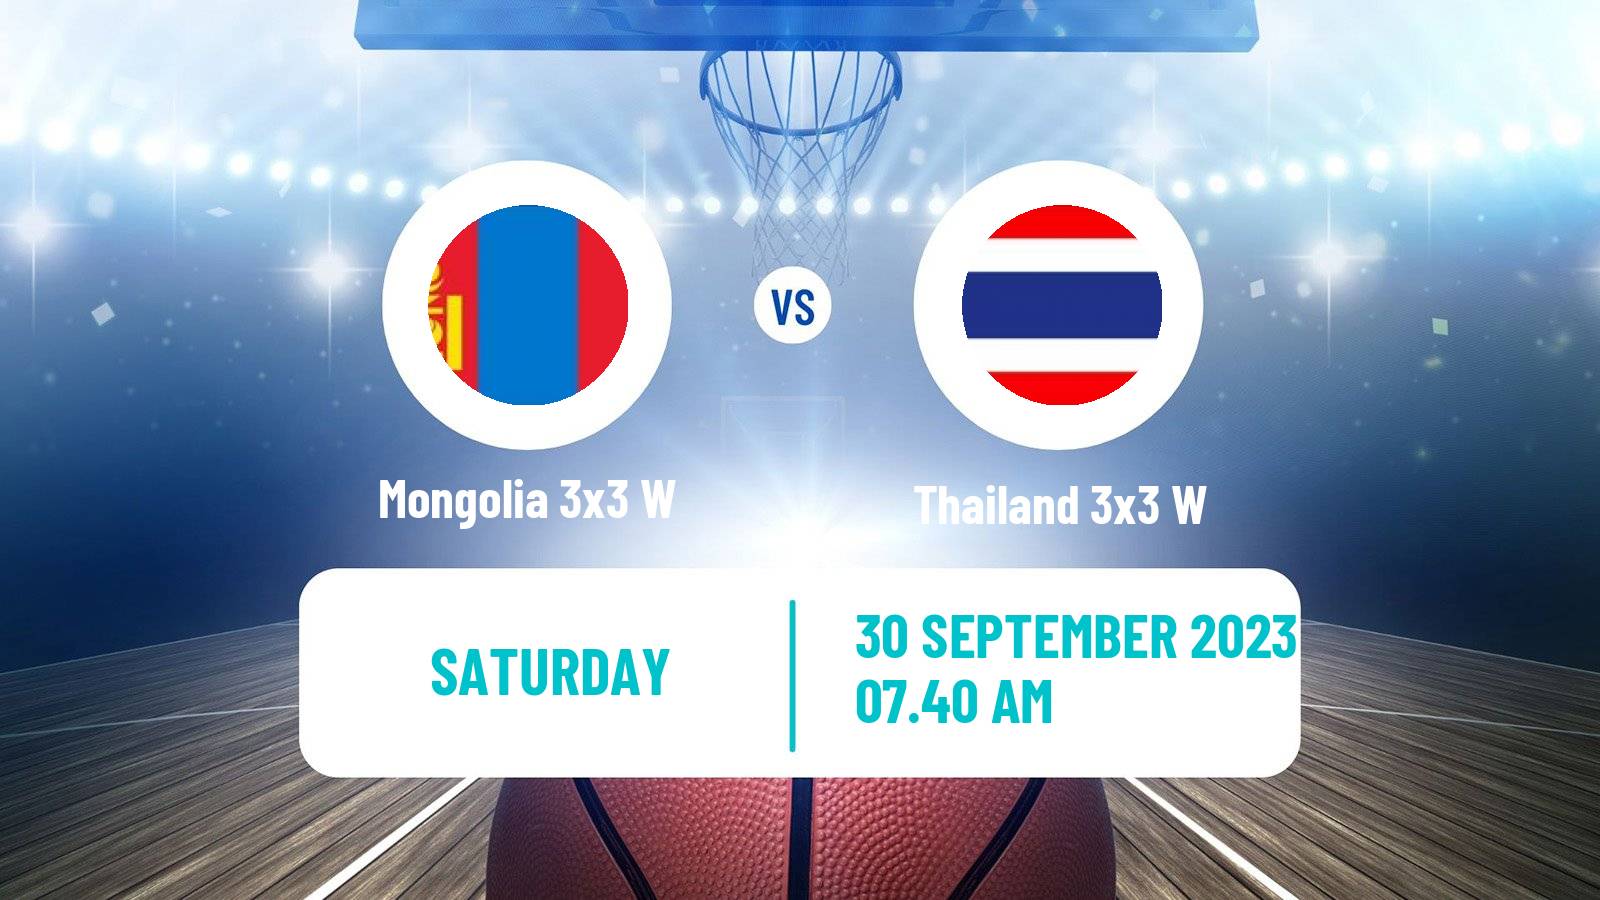 Basketball Asian Games Basketball 3x3 Women Mongolia 3x3 W - Thailand 3x3 W